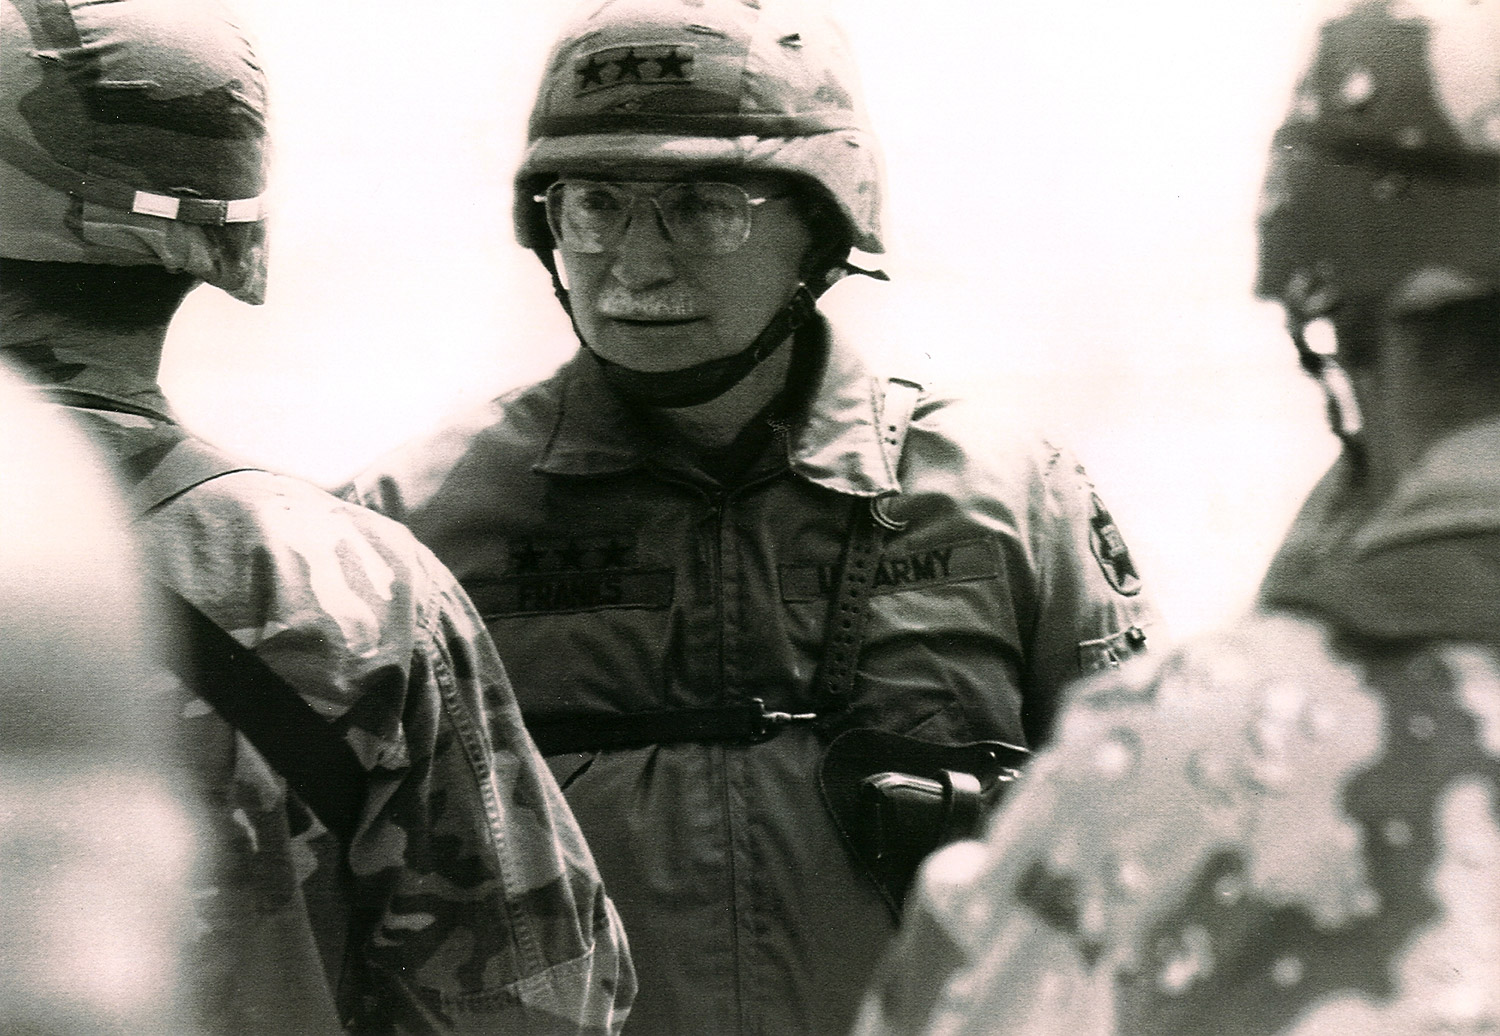 Then-Lieutenant General Fred Franks during Desert Storm